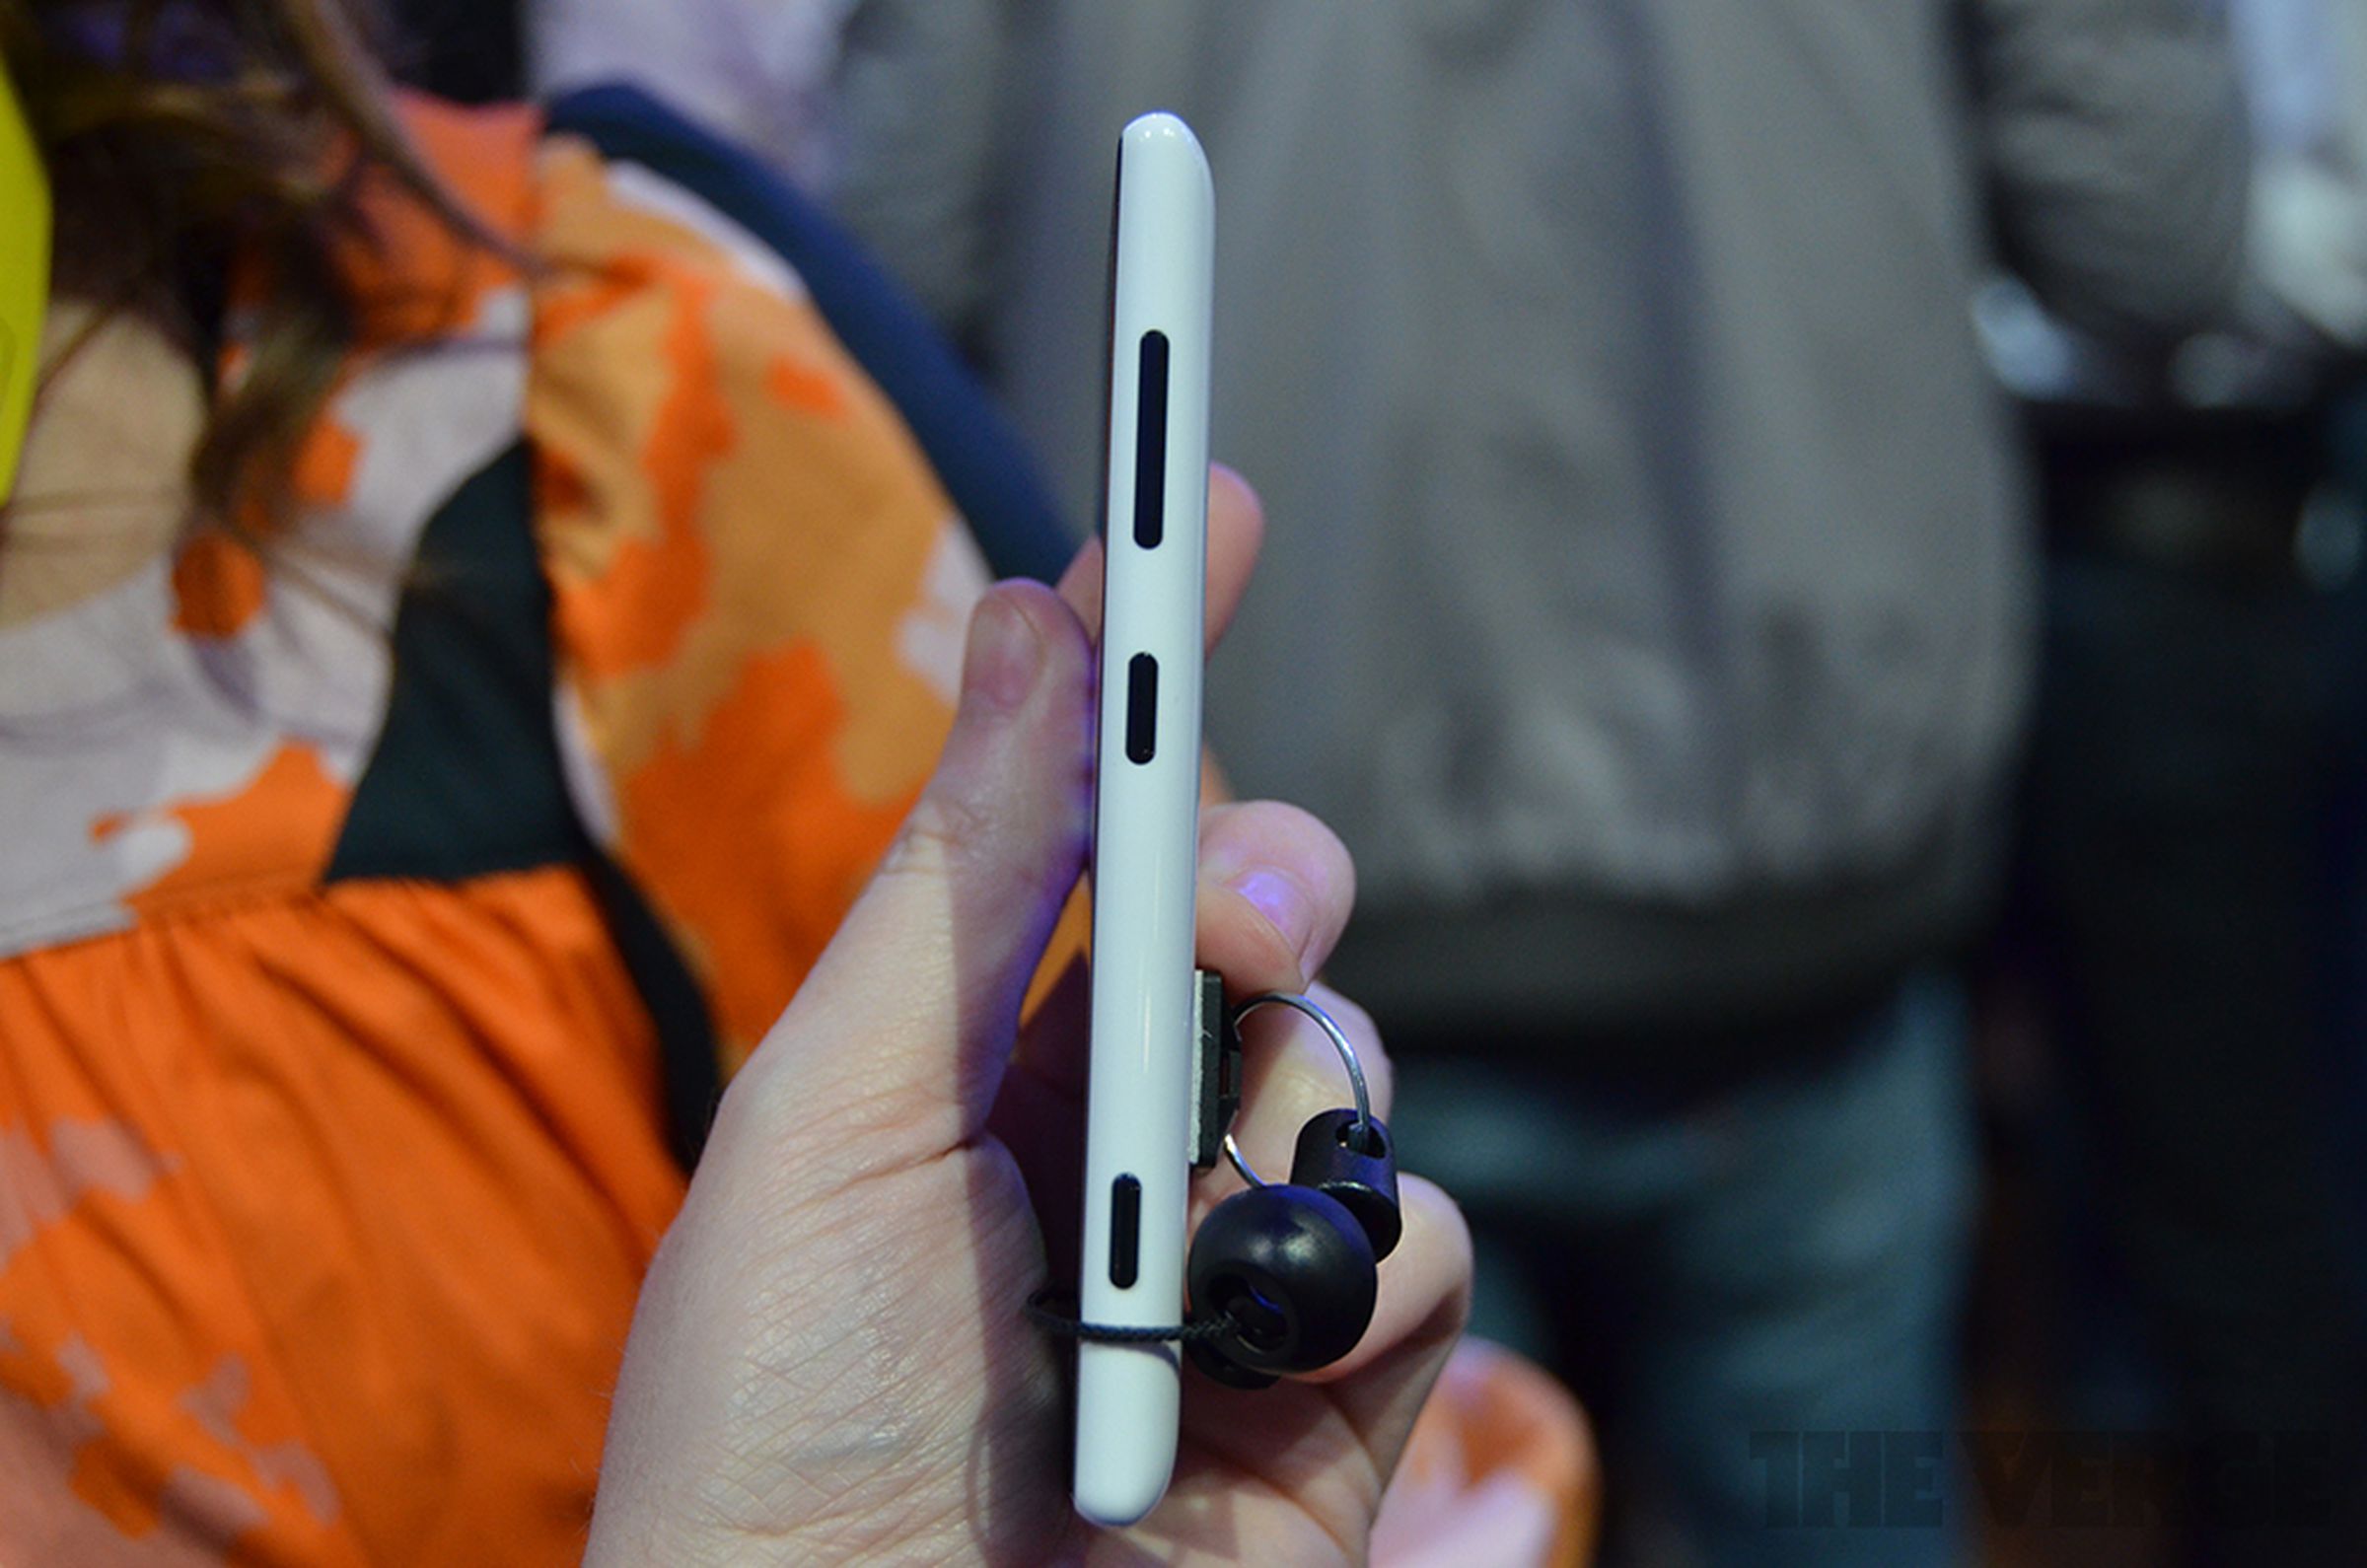 Nokia Lumia 720 hands-on photos